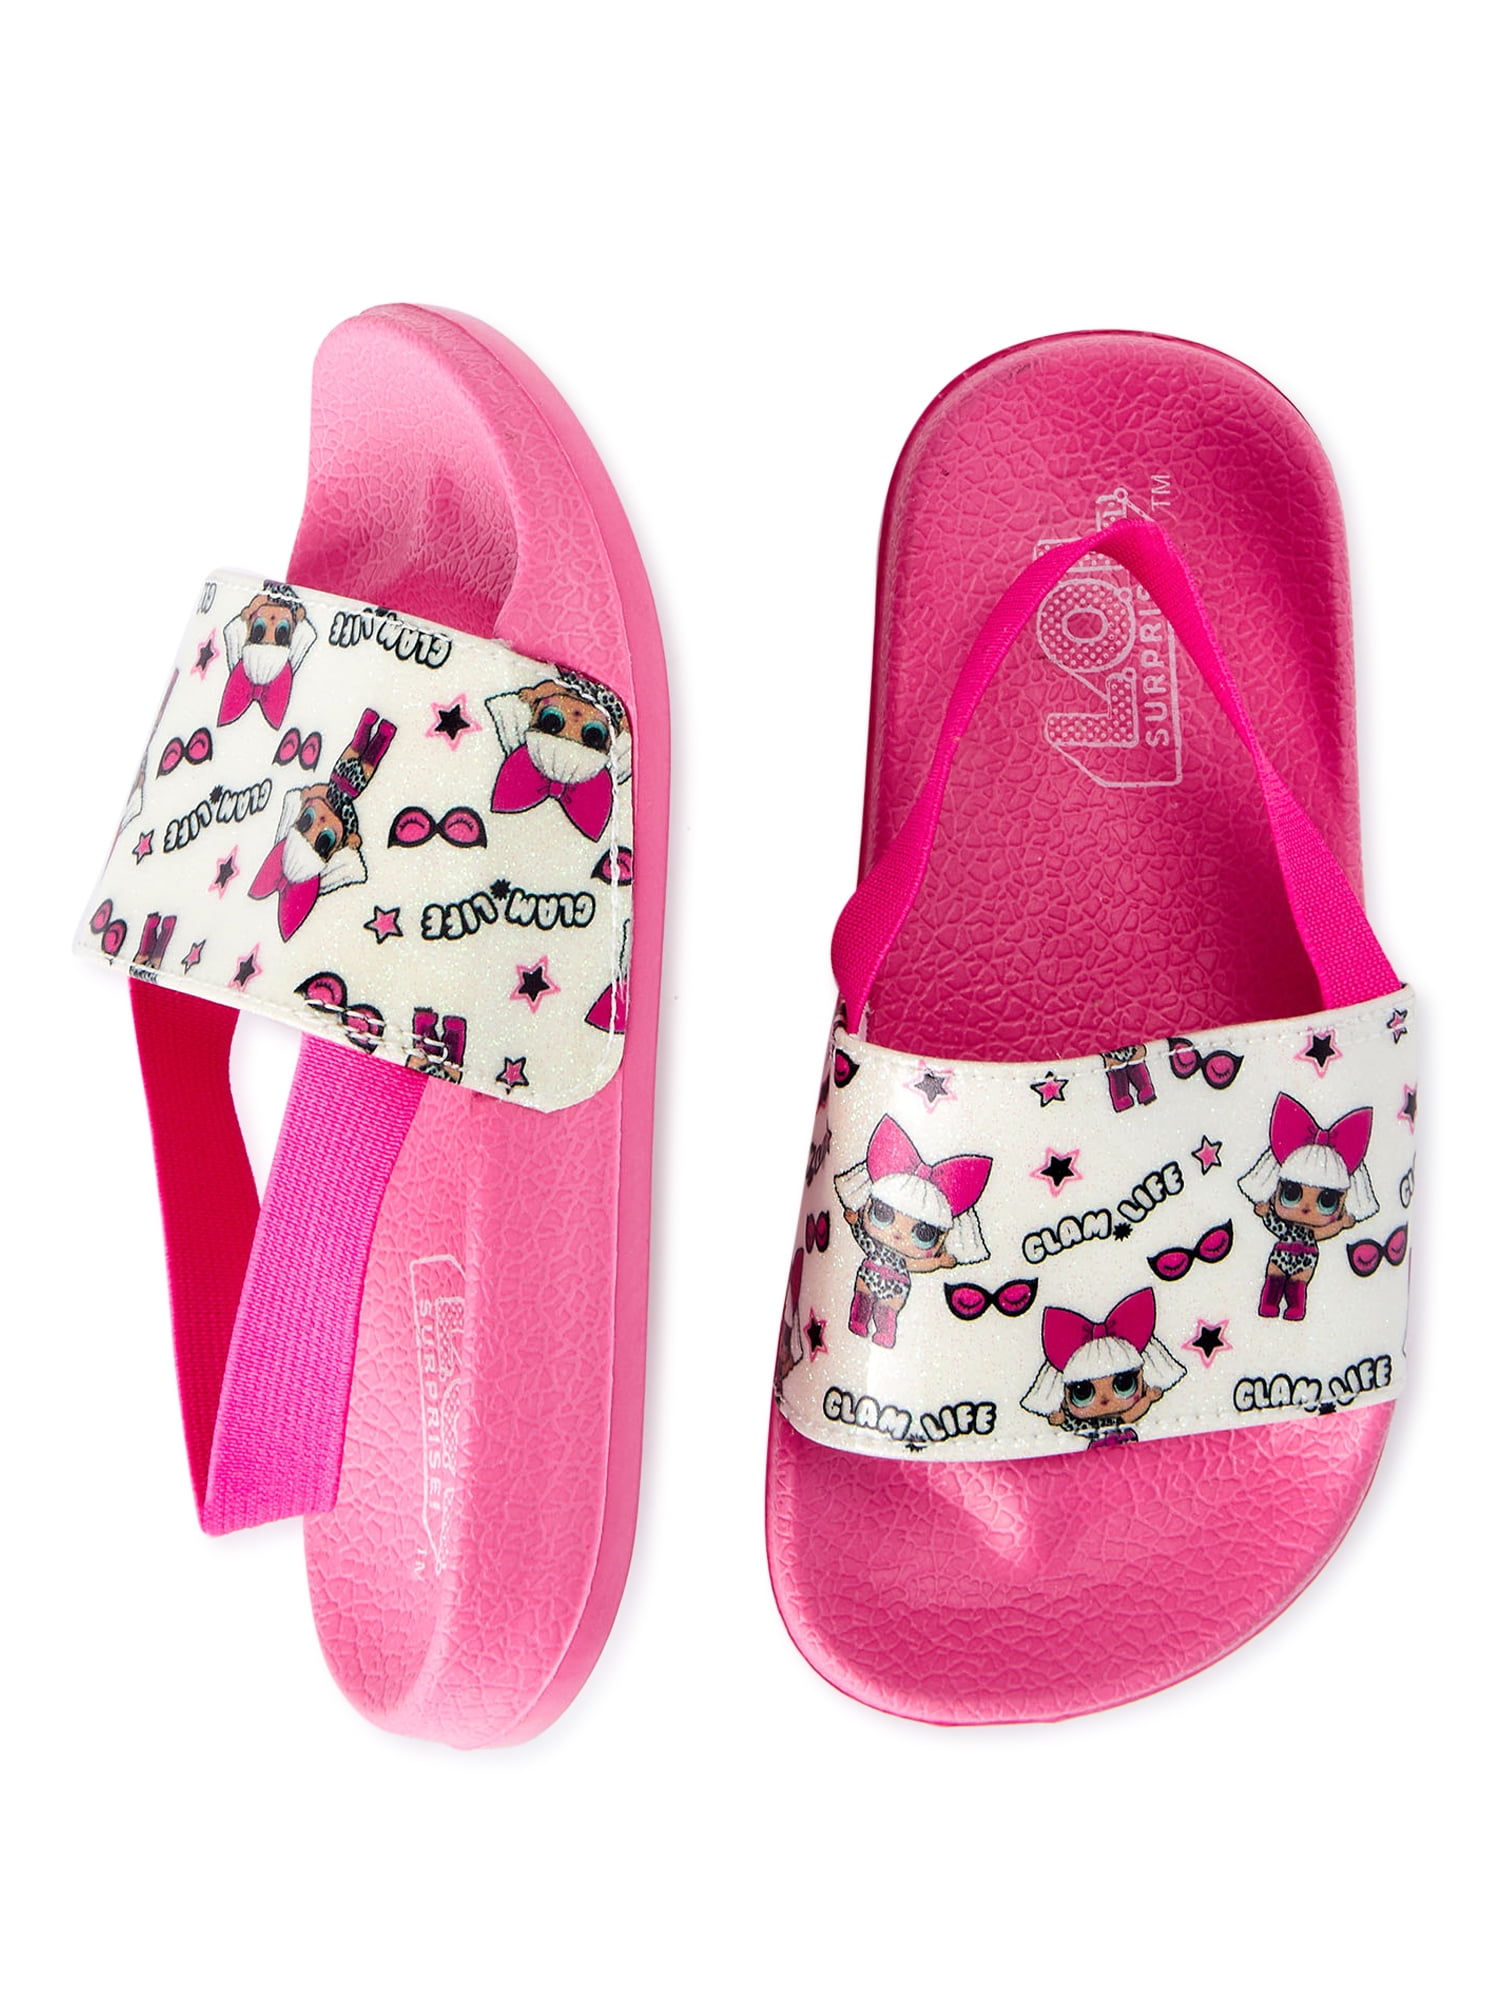 Lora Dora Girls Sandals Iridescent Glitter Sliders